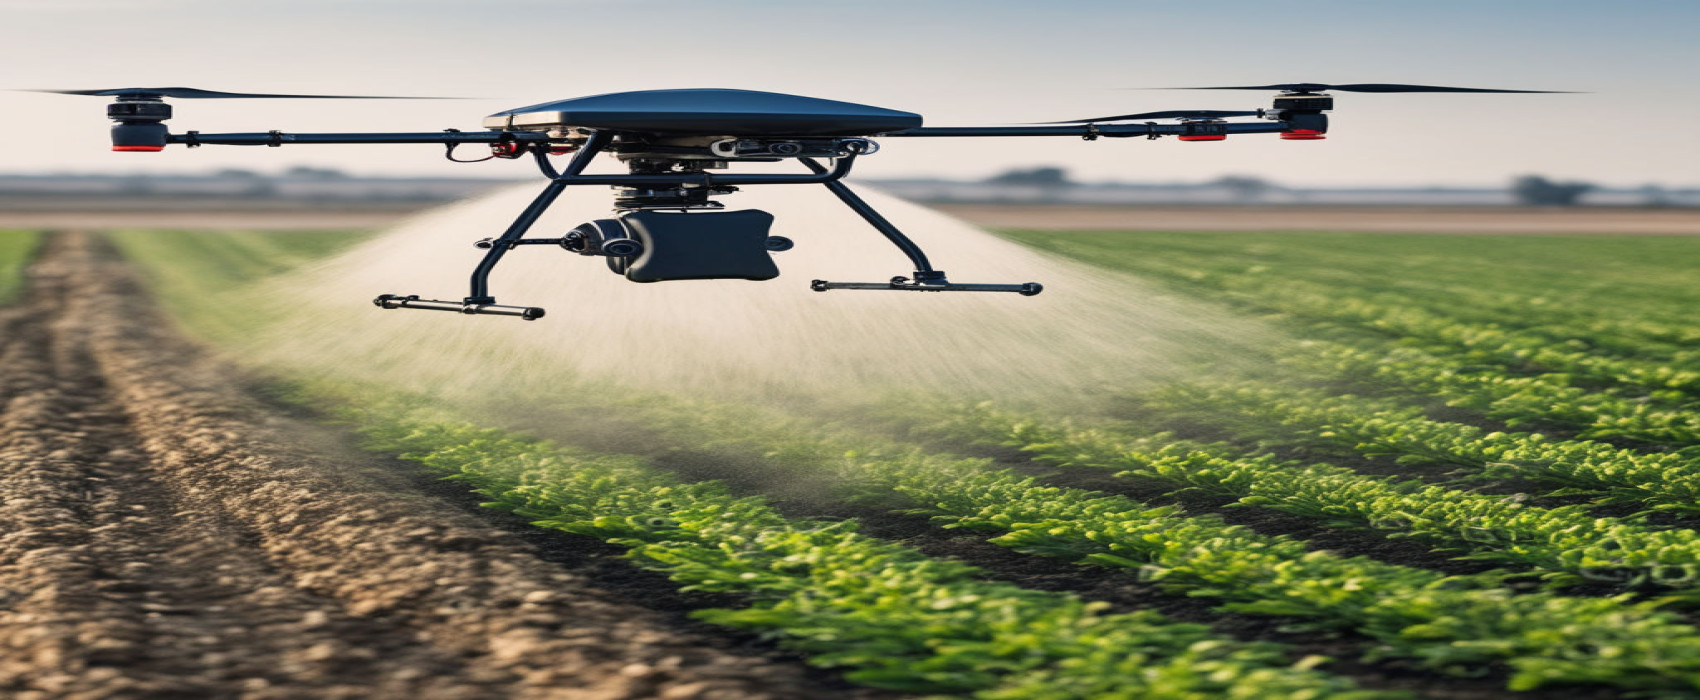 Drone Crop Spraying: